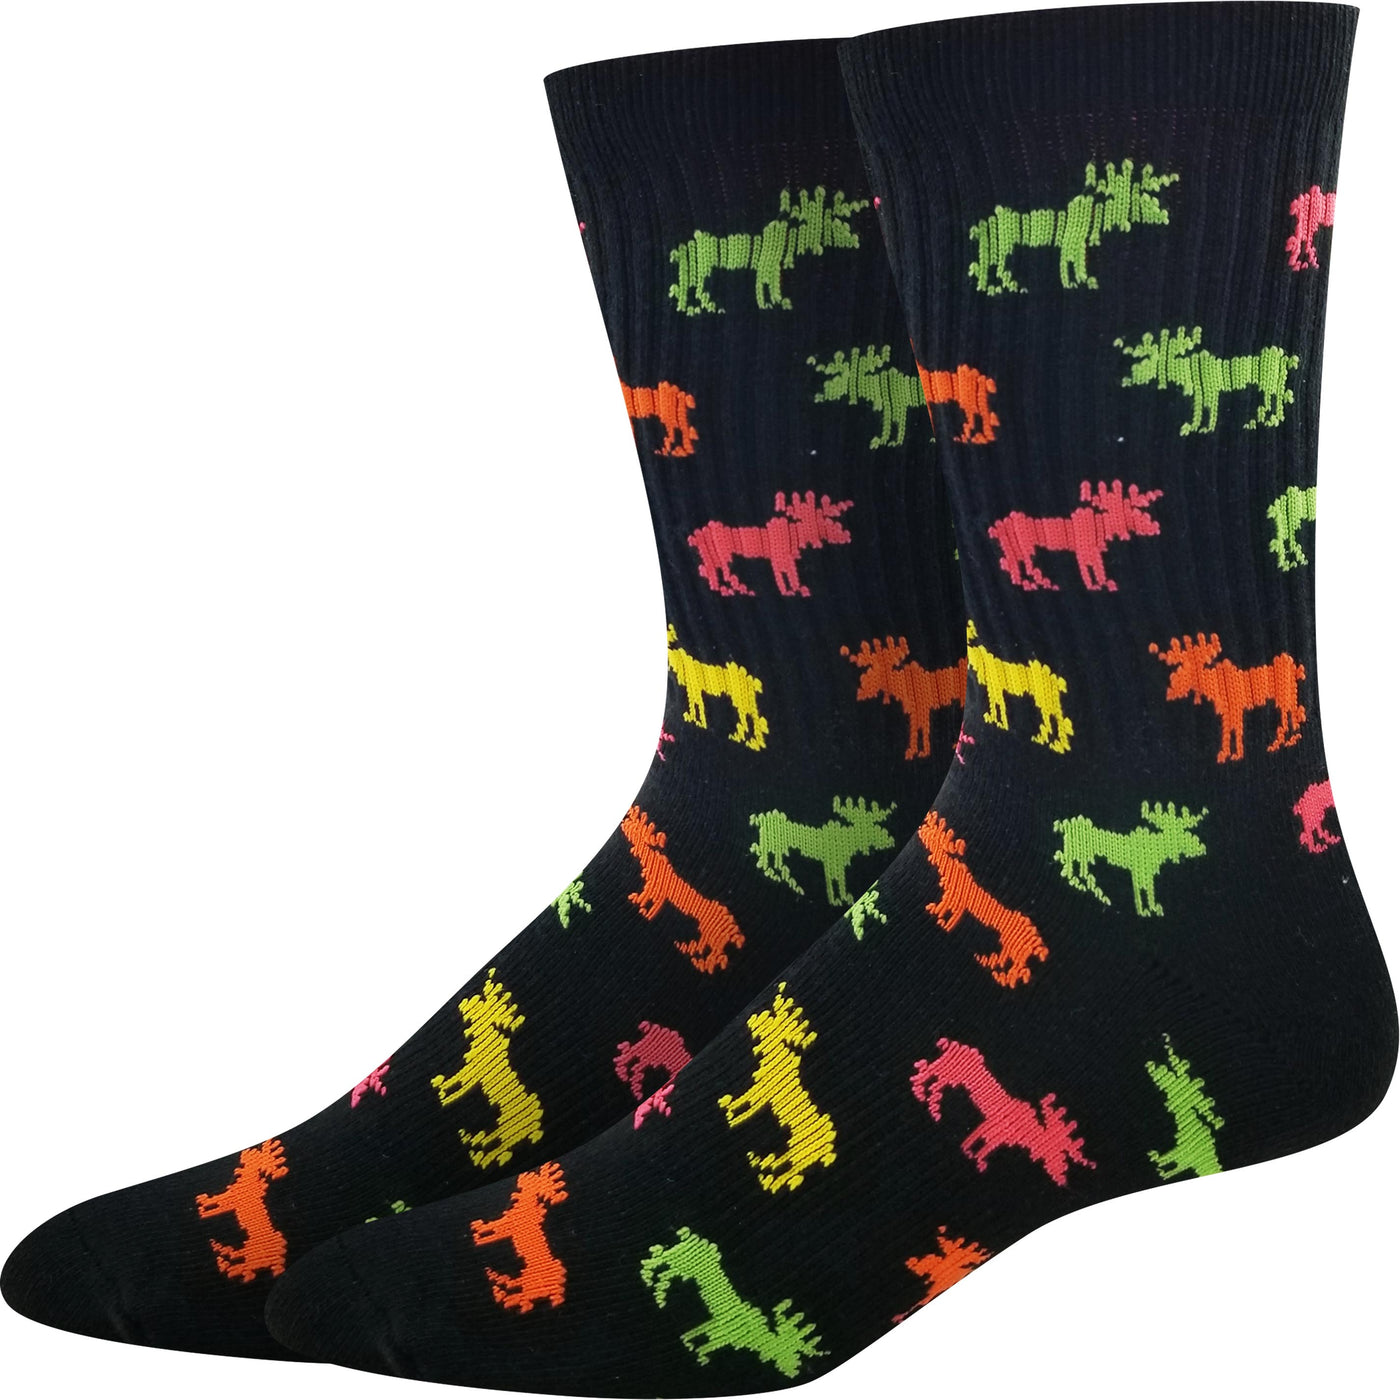 Neon Moose Socks